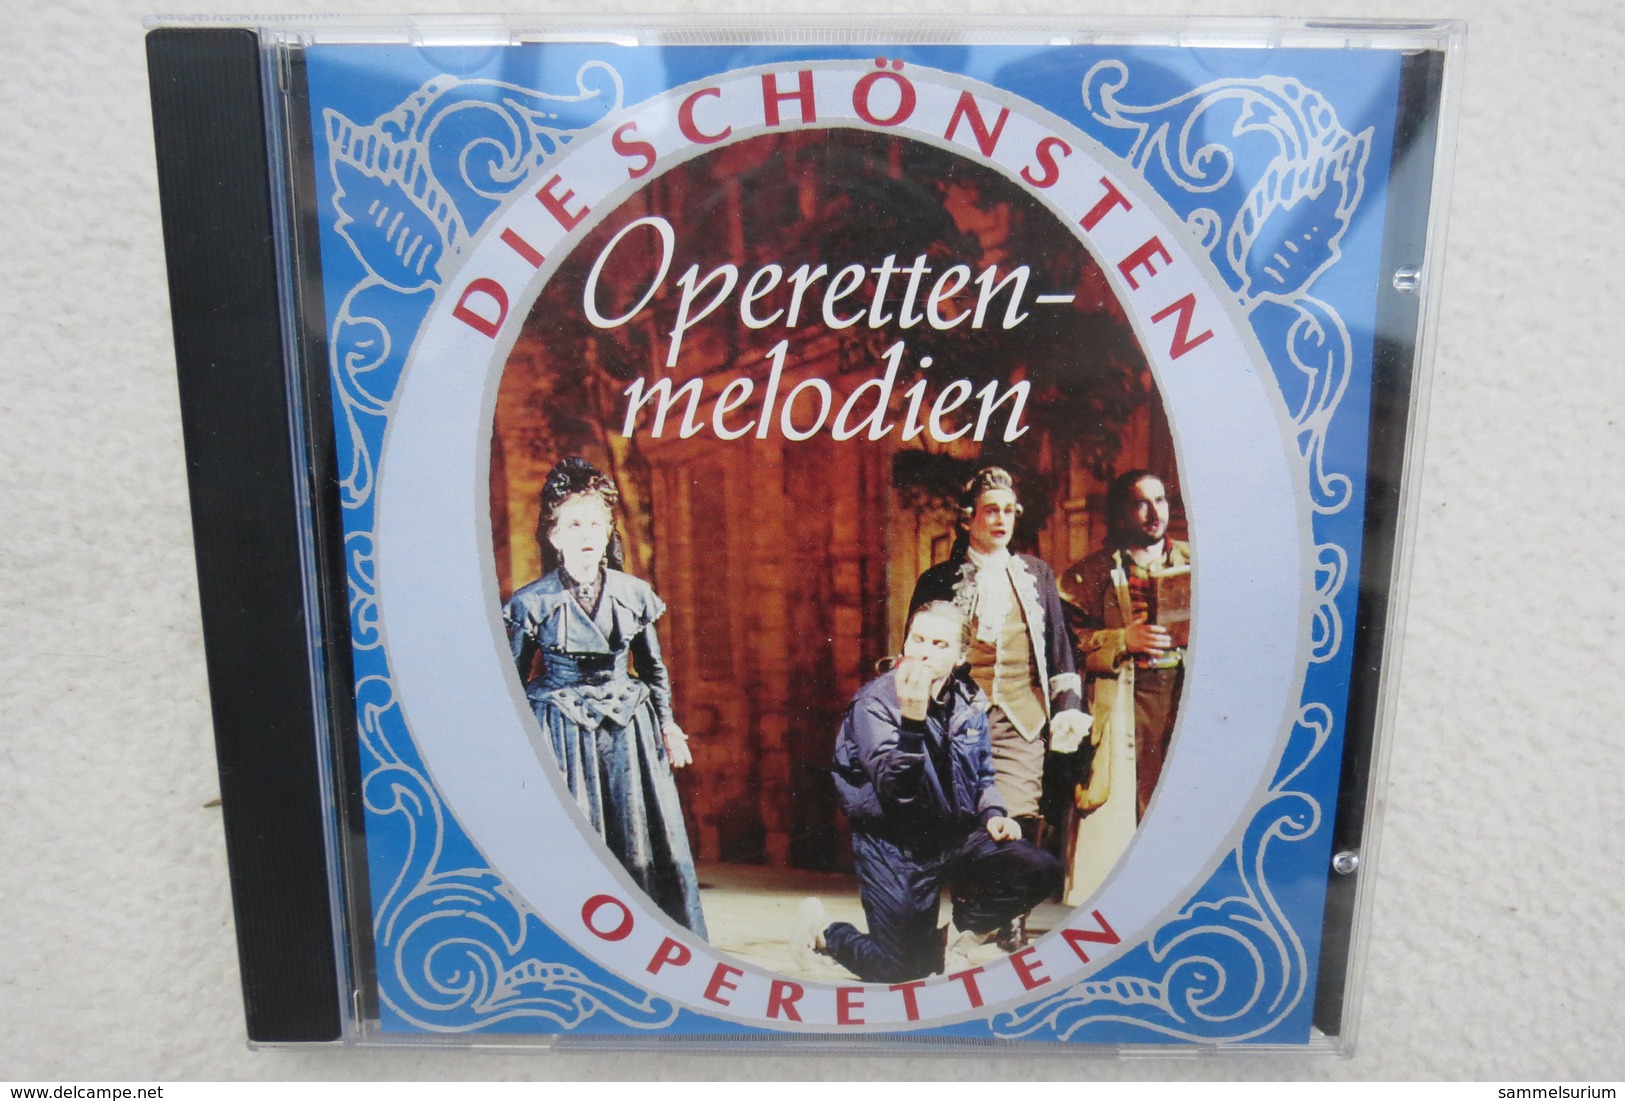 CD "Die Schönsten Operetten" Operettenmelodien - Opéra & Opérette